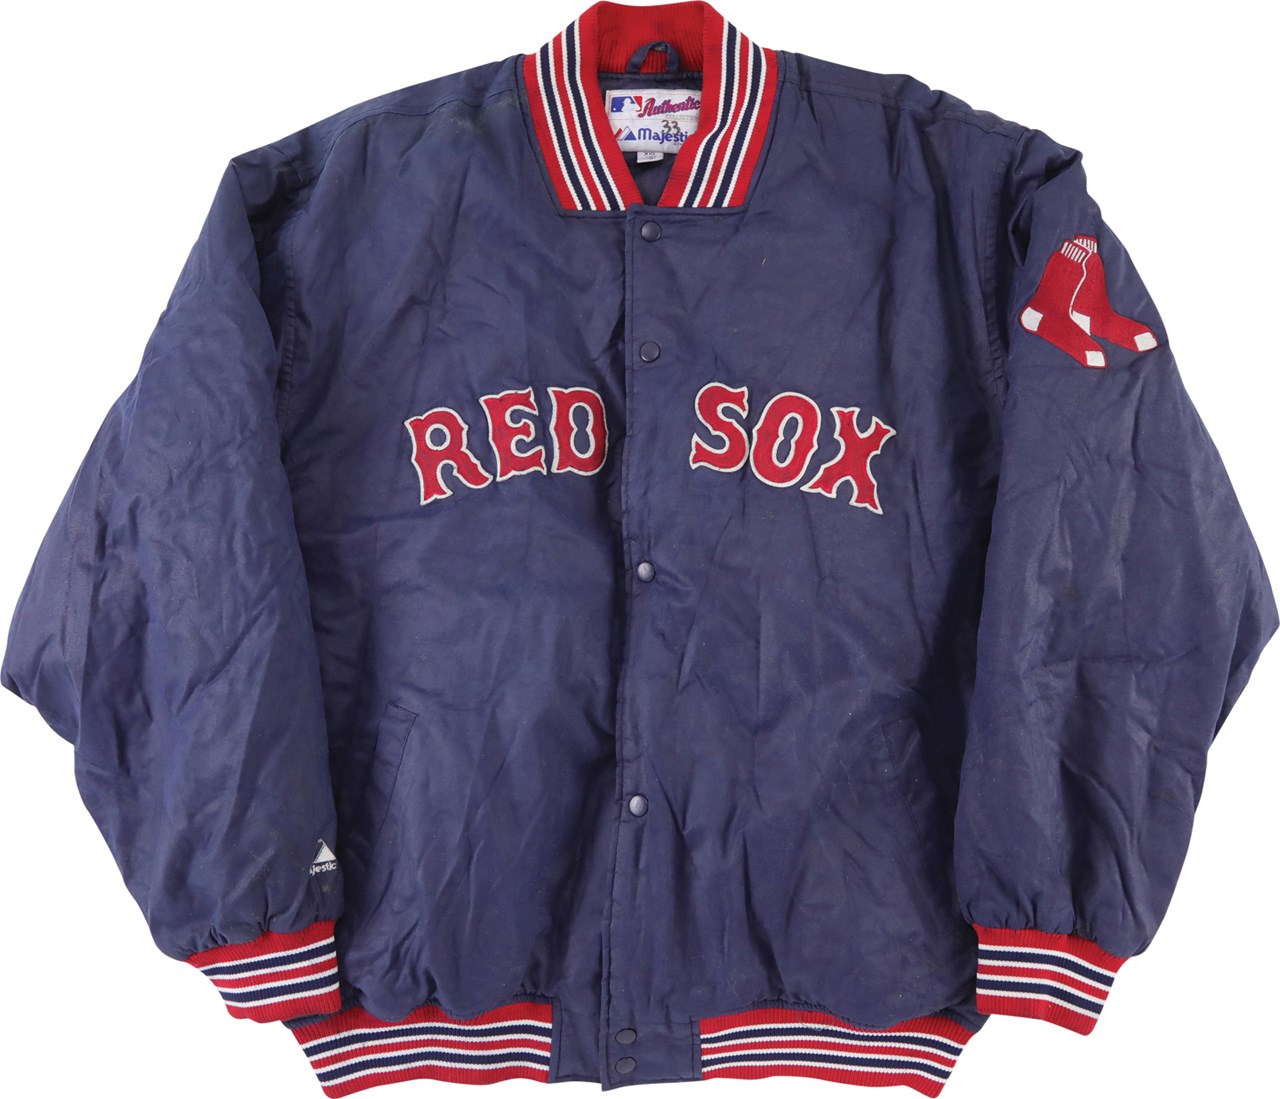 Baseball Equipment - 2000s Jason Varitek Boston Red Sox Game Worn Jacket